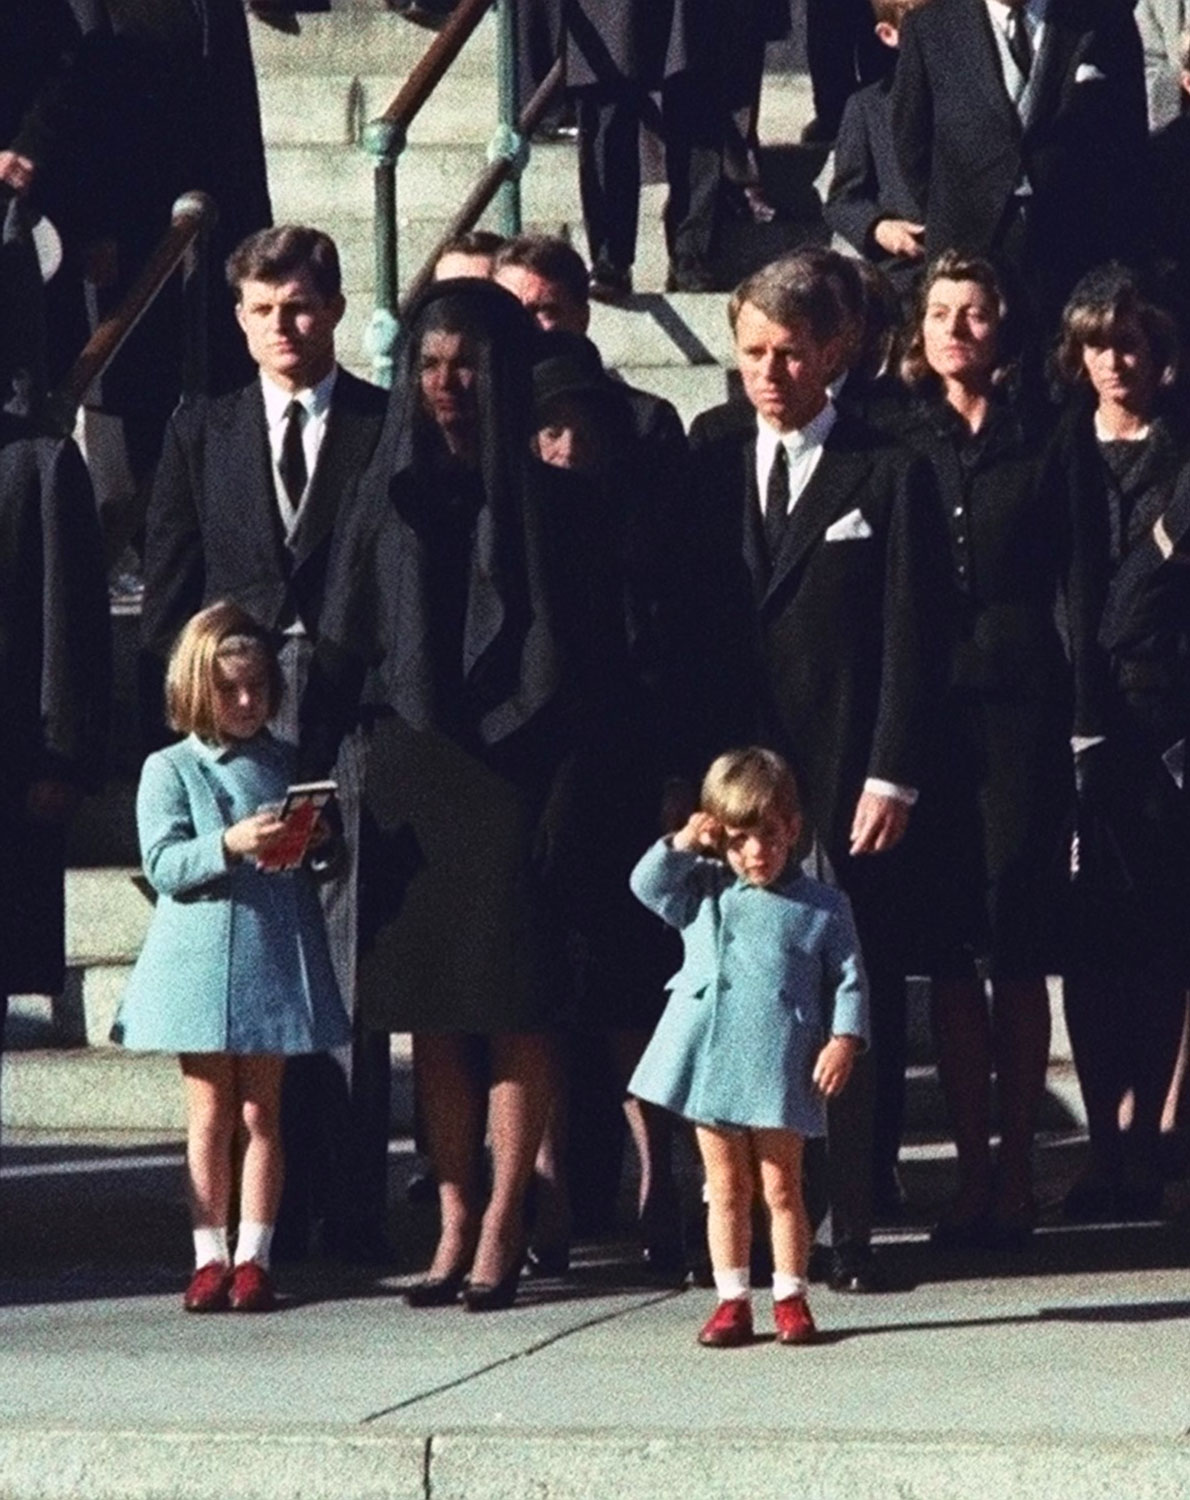 Funerale di Kennedy - JFK Funeral - 25 novembre 1963